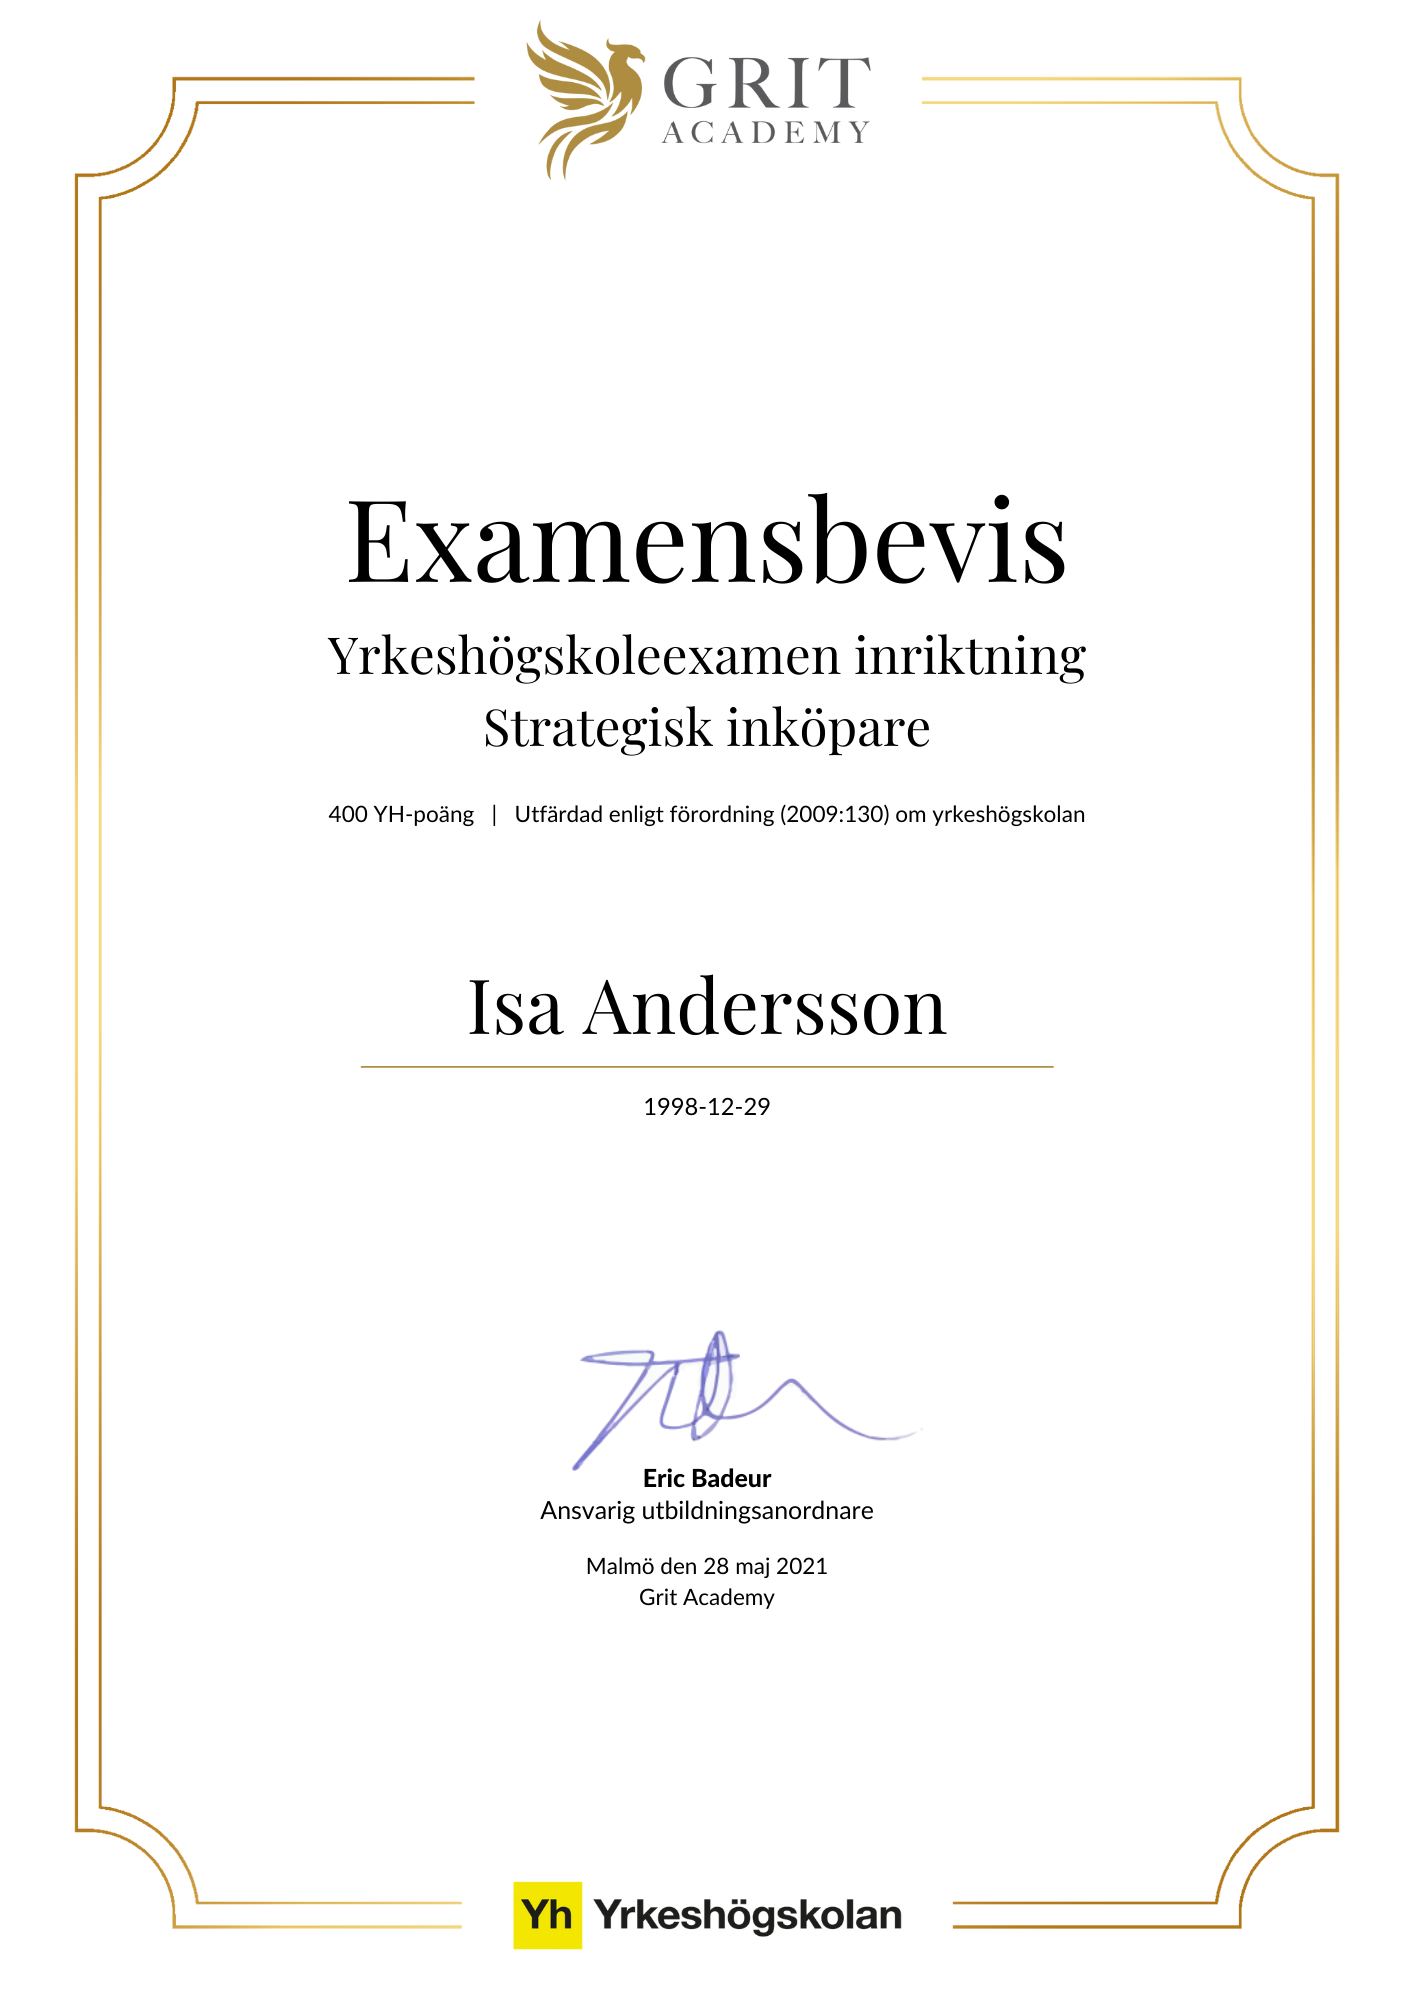 Examensbevis Isa Andersson - 1